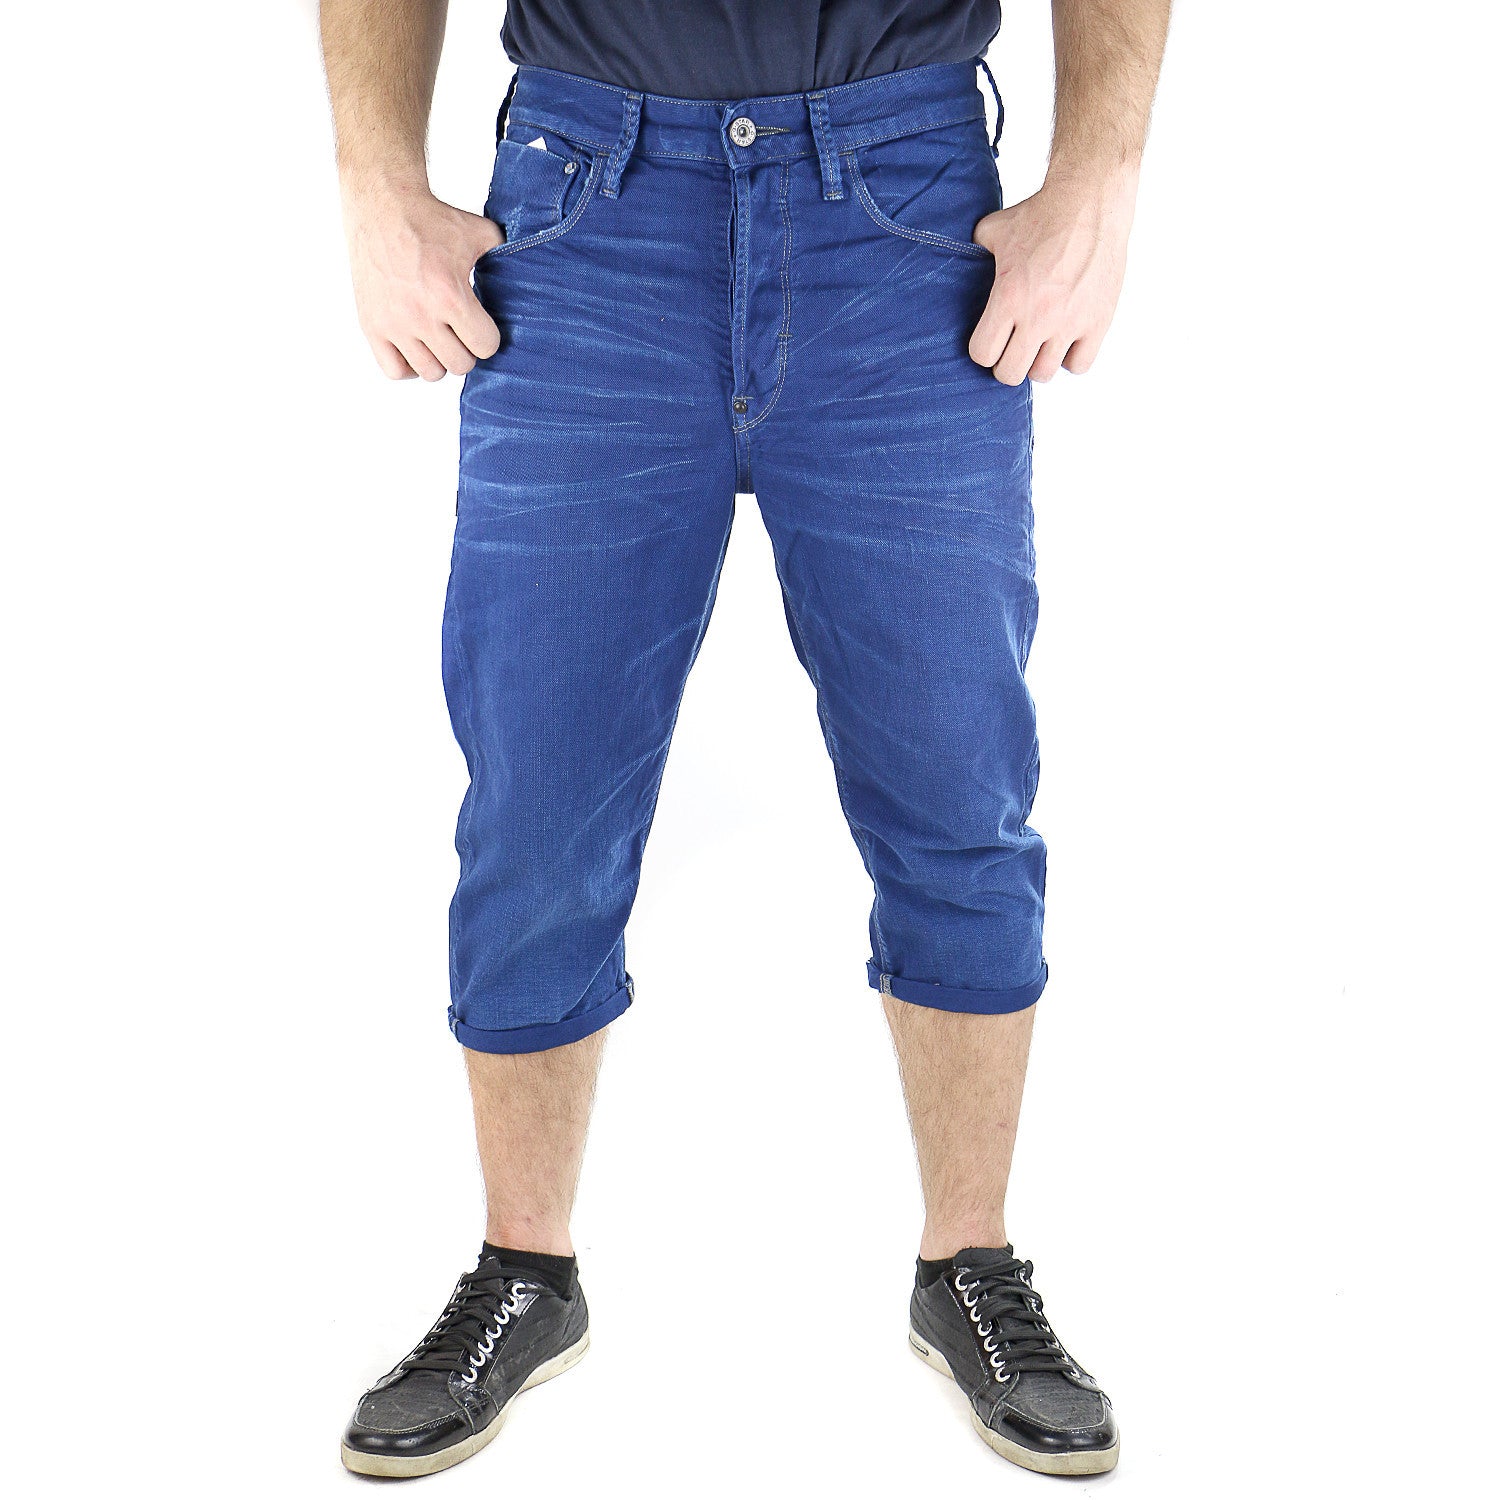 Boys three fourth shorts & capri soft stretchable denim dark blue color  below knee length